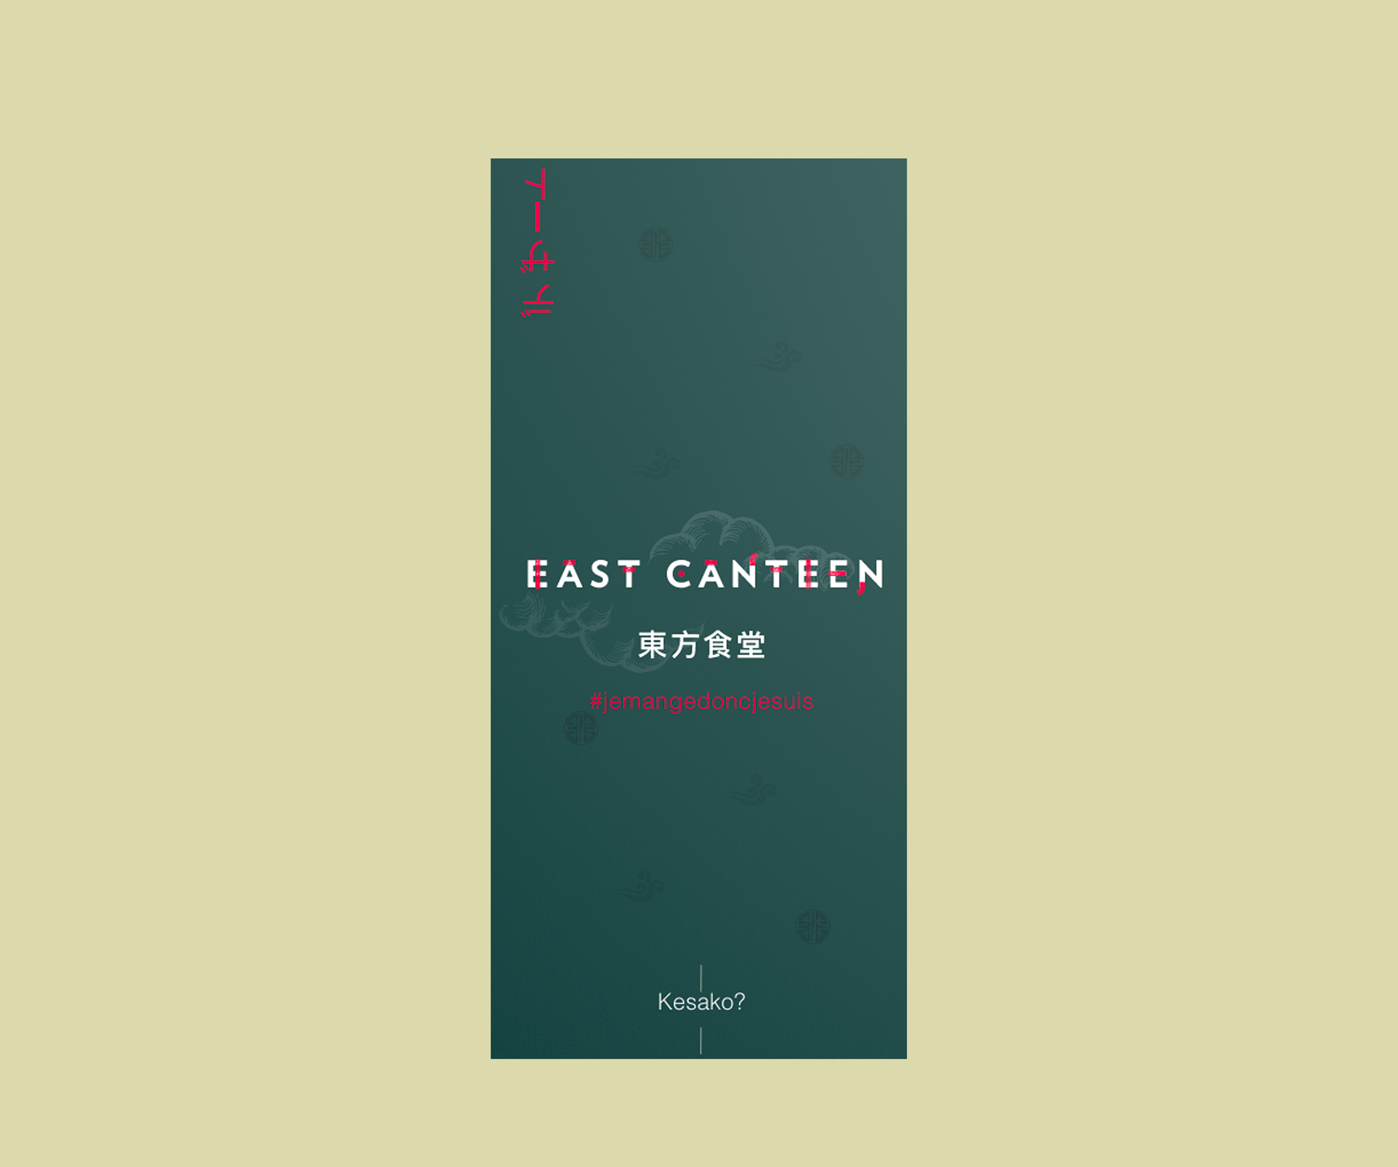 mockup_east_canteen